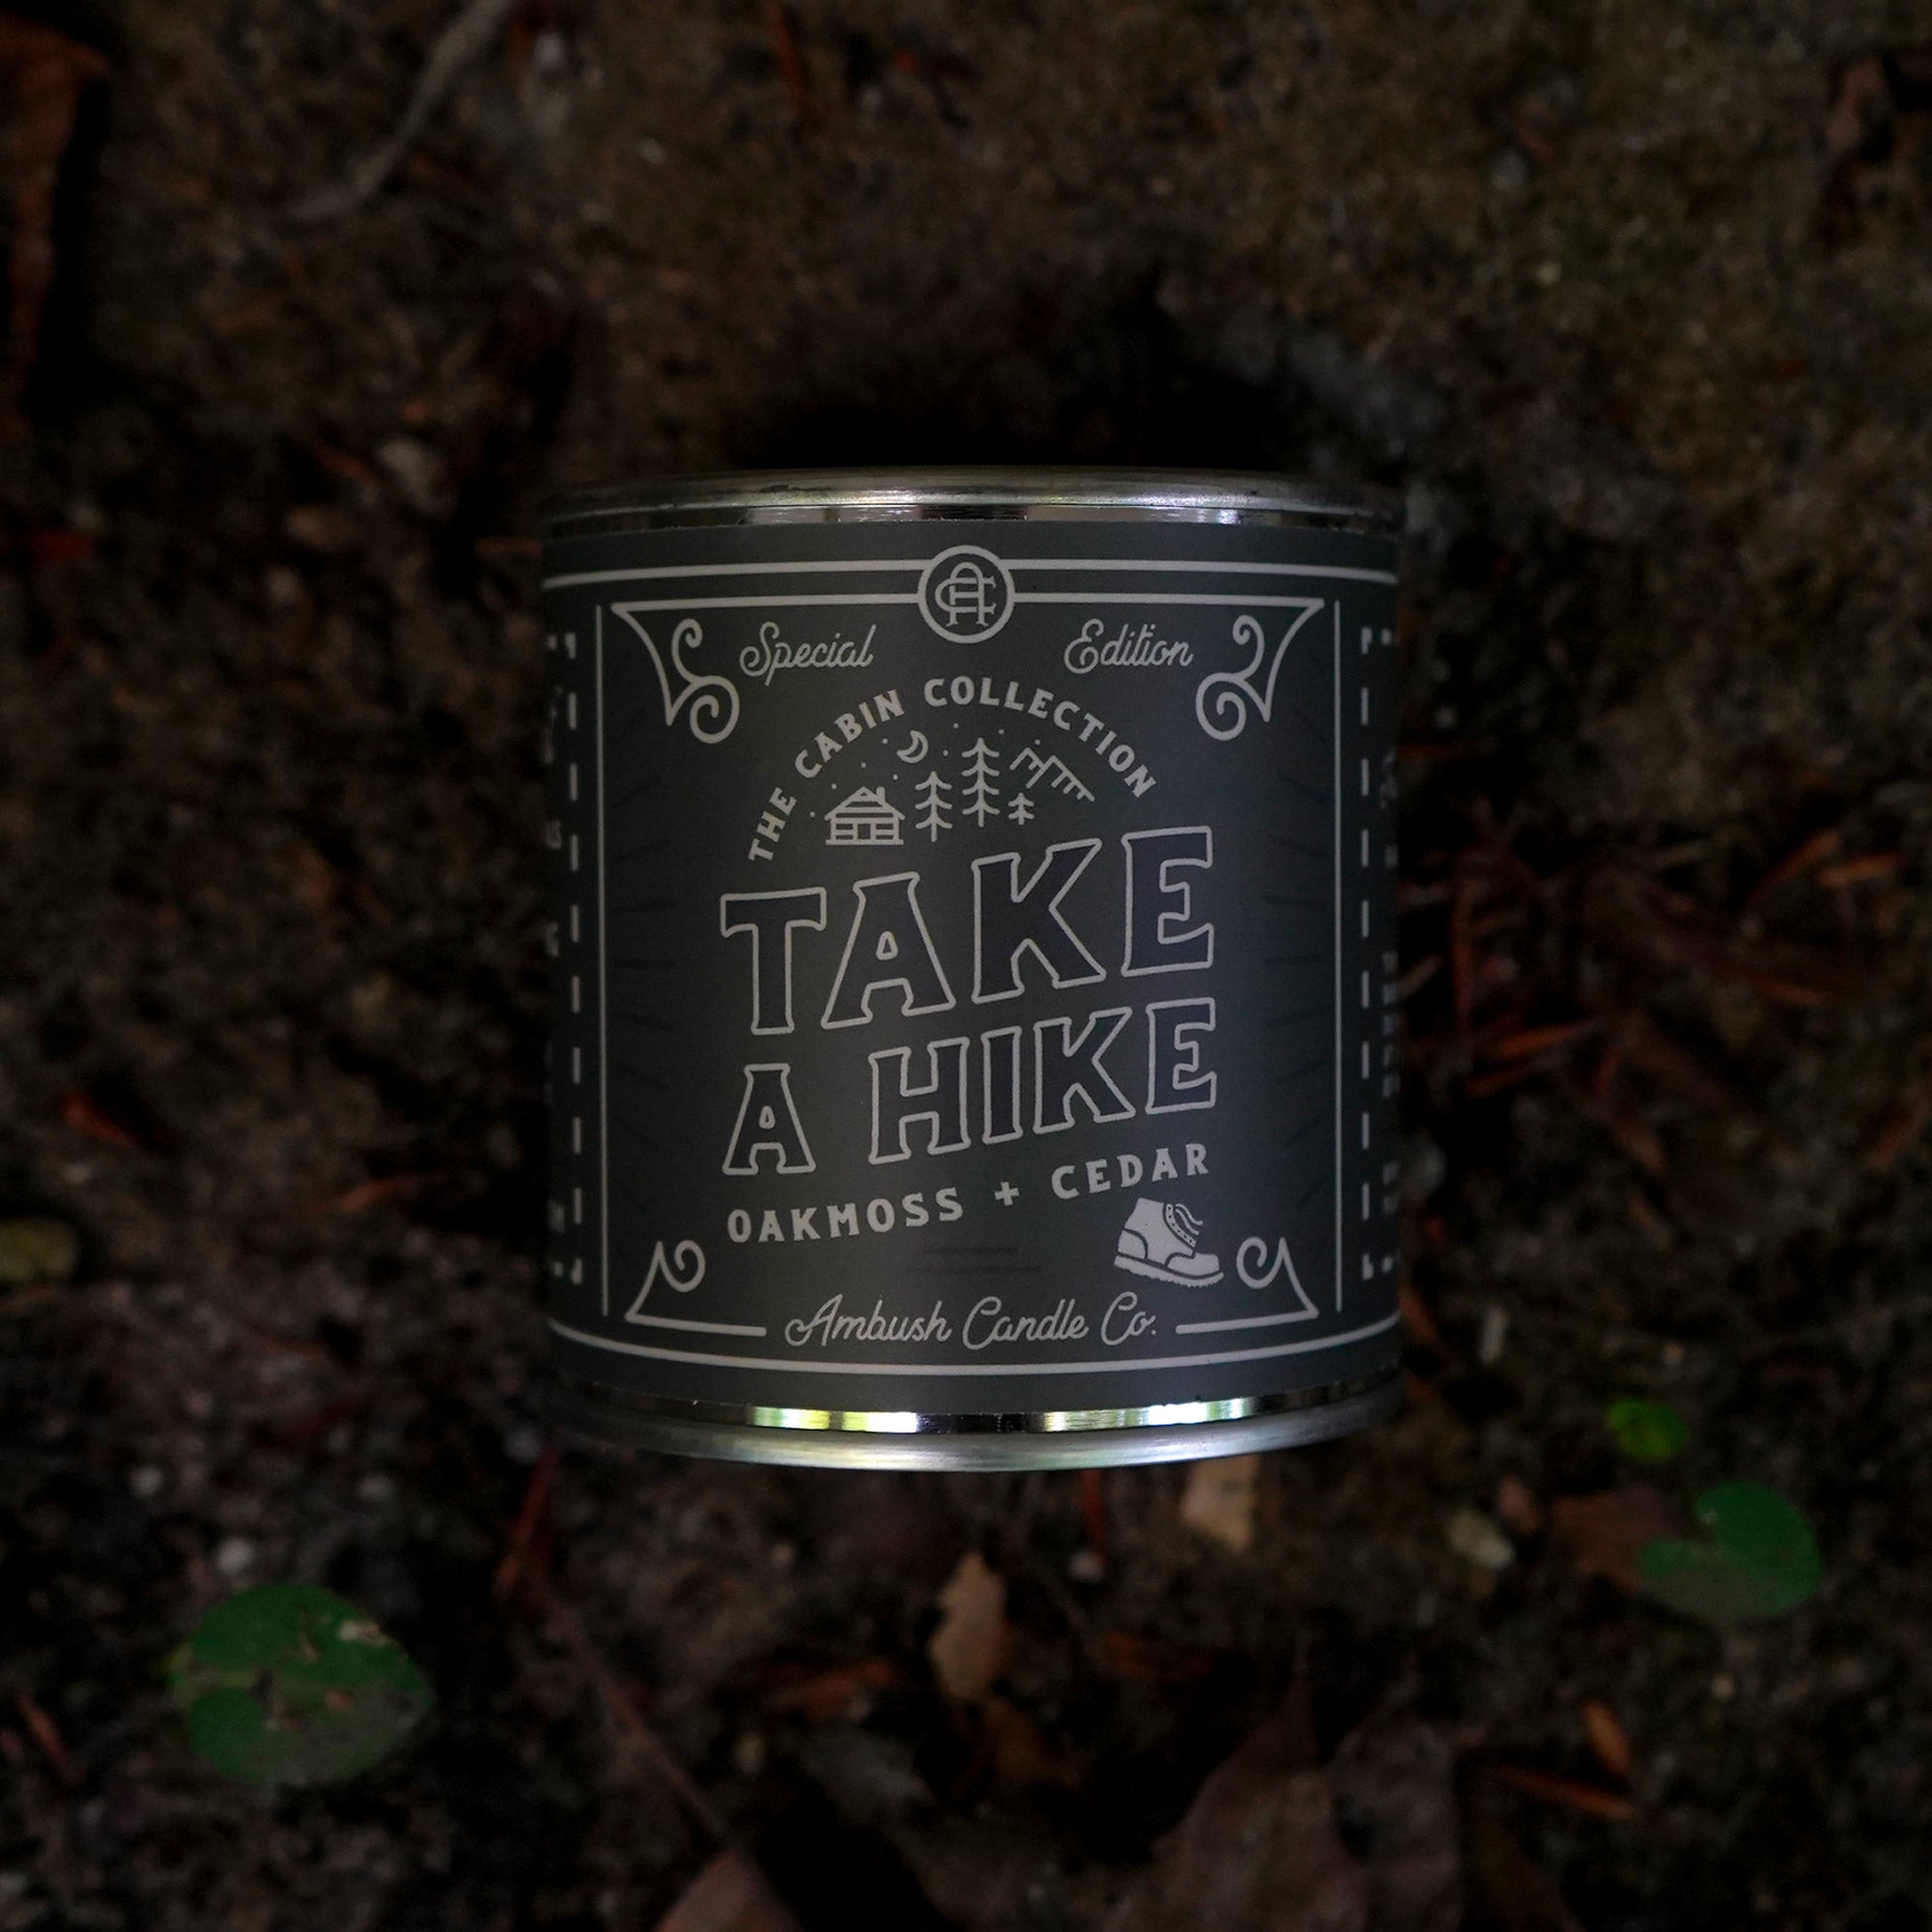 Ambush Candle Co. 8oz 'Take A Hike' Soy Candle - Oakmoss / Cedar